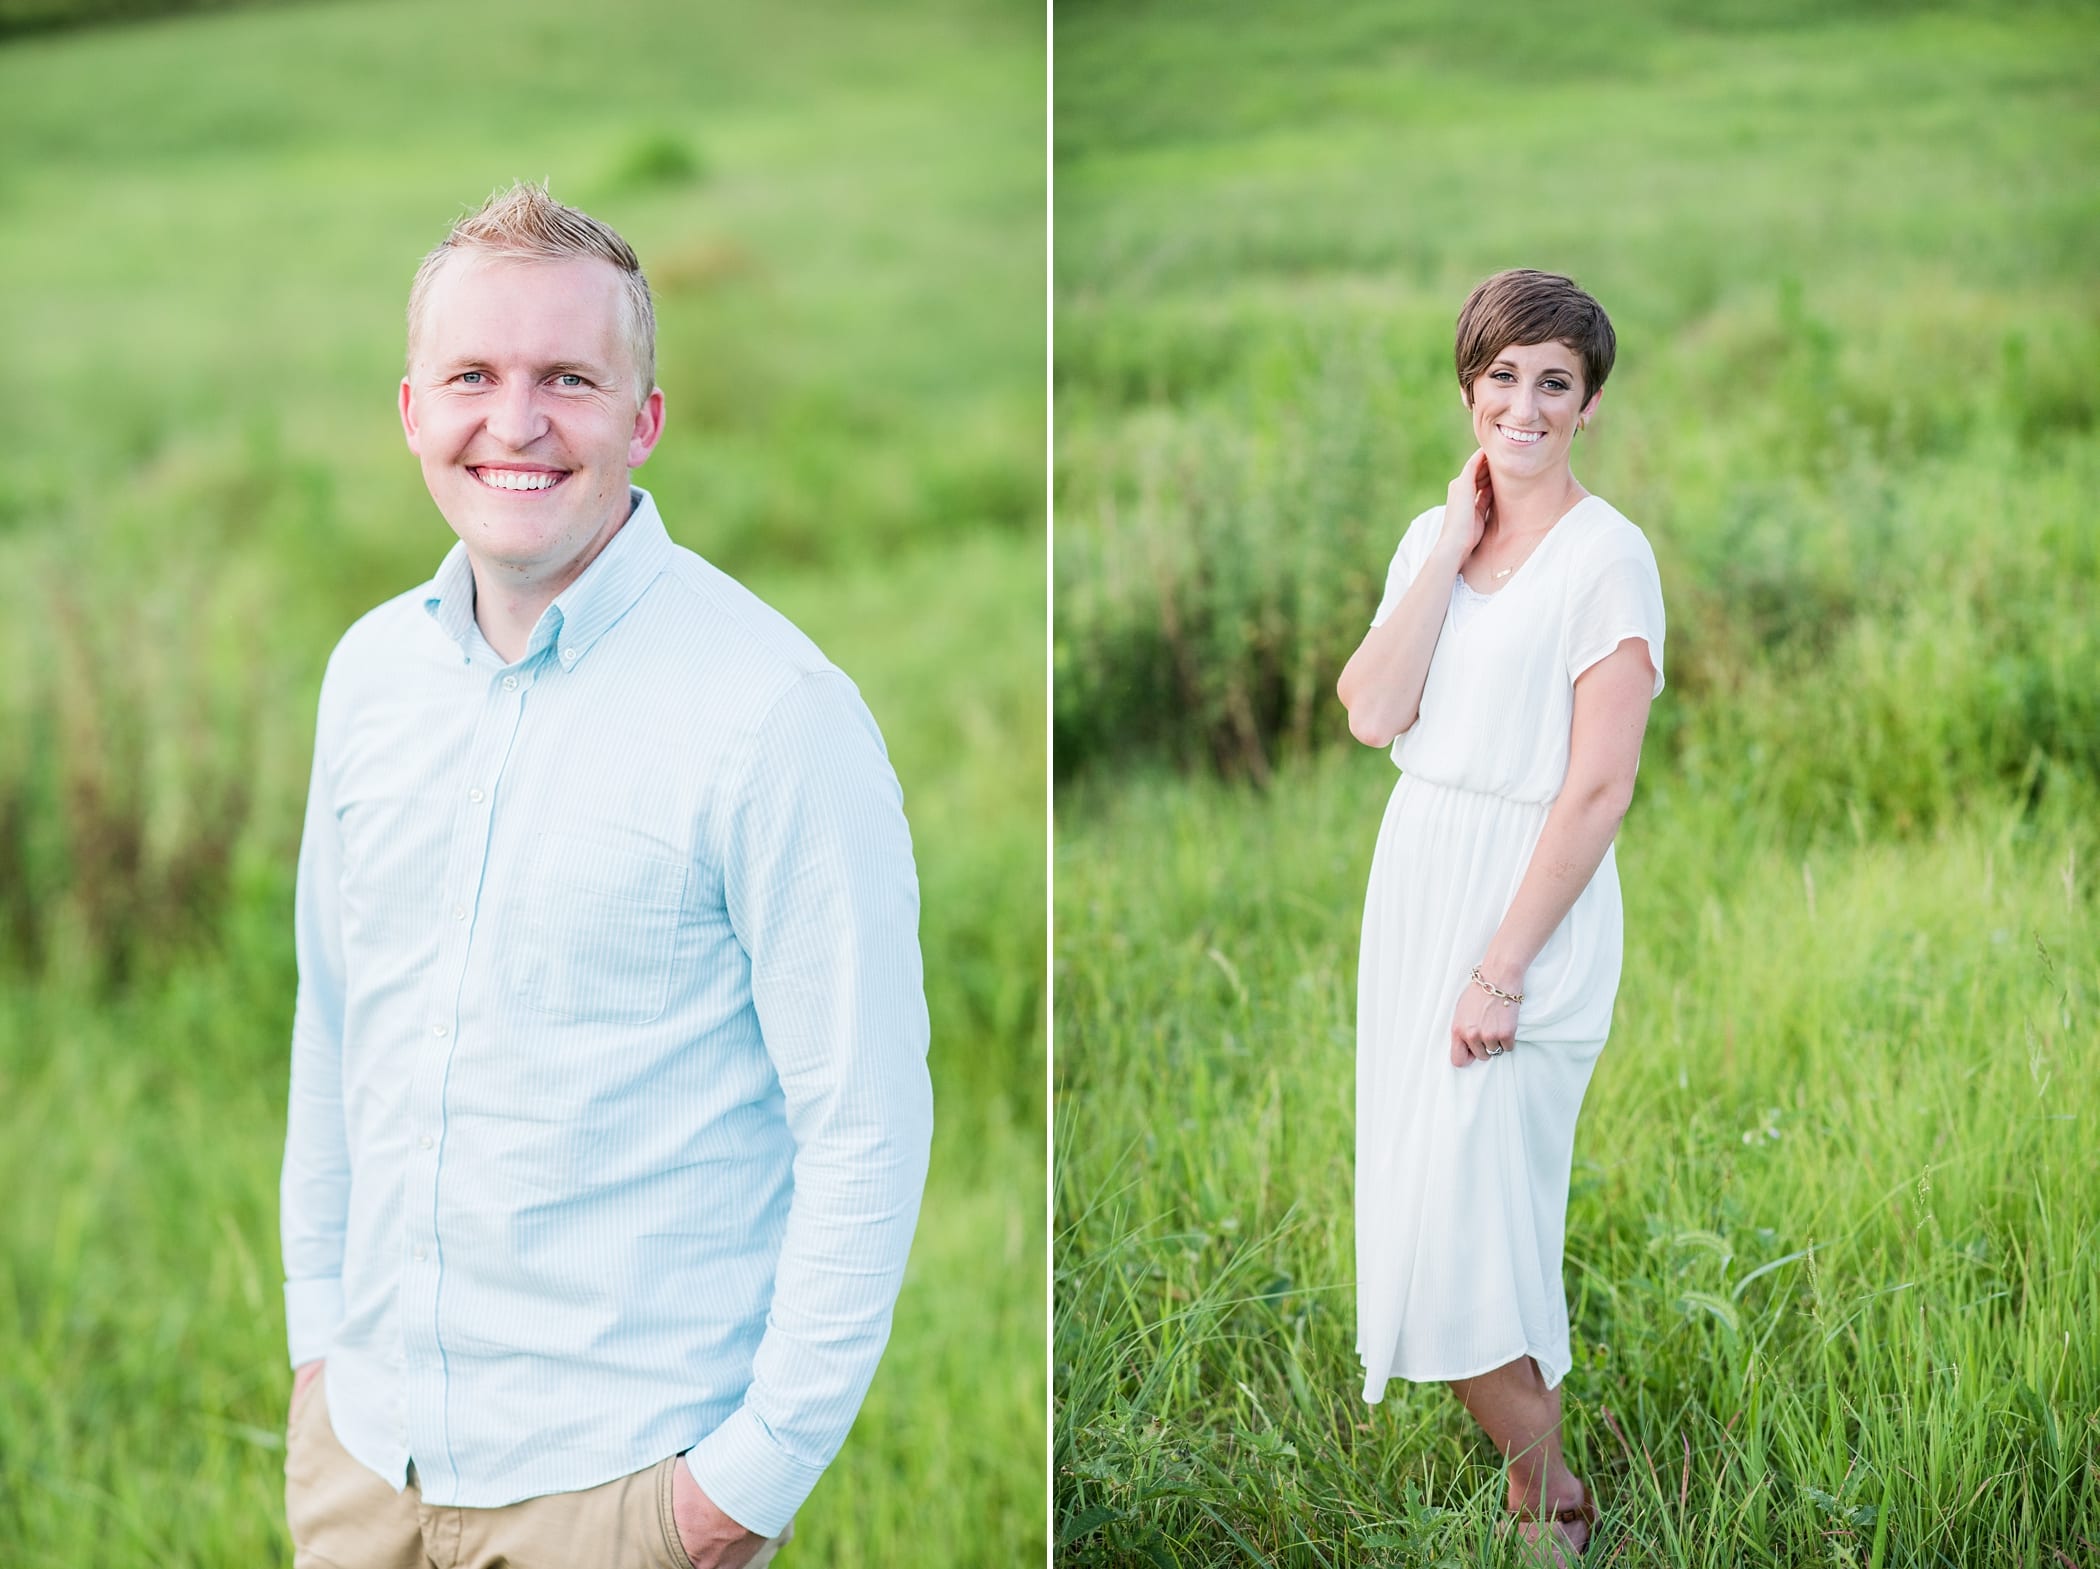 Michelle & Logan | Idaho Falls Wedding Photographer and Videographer